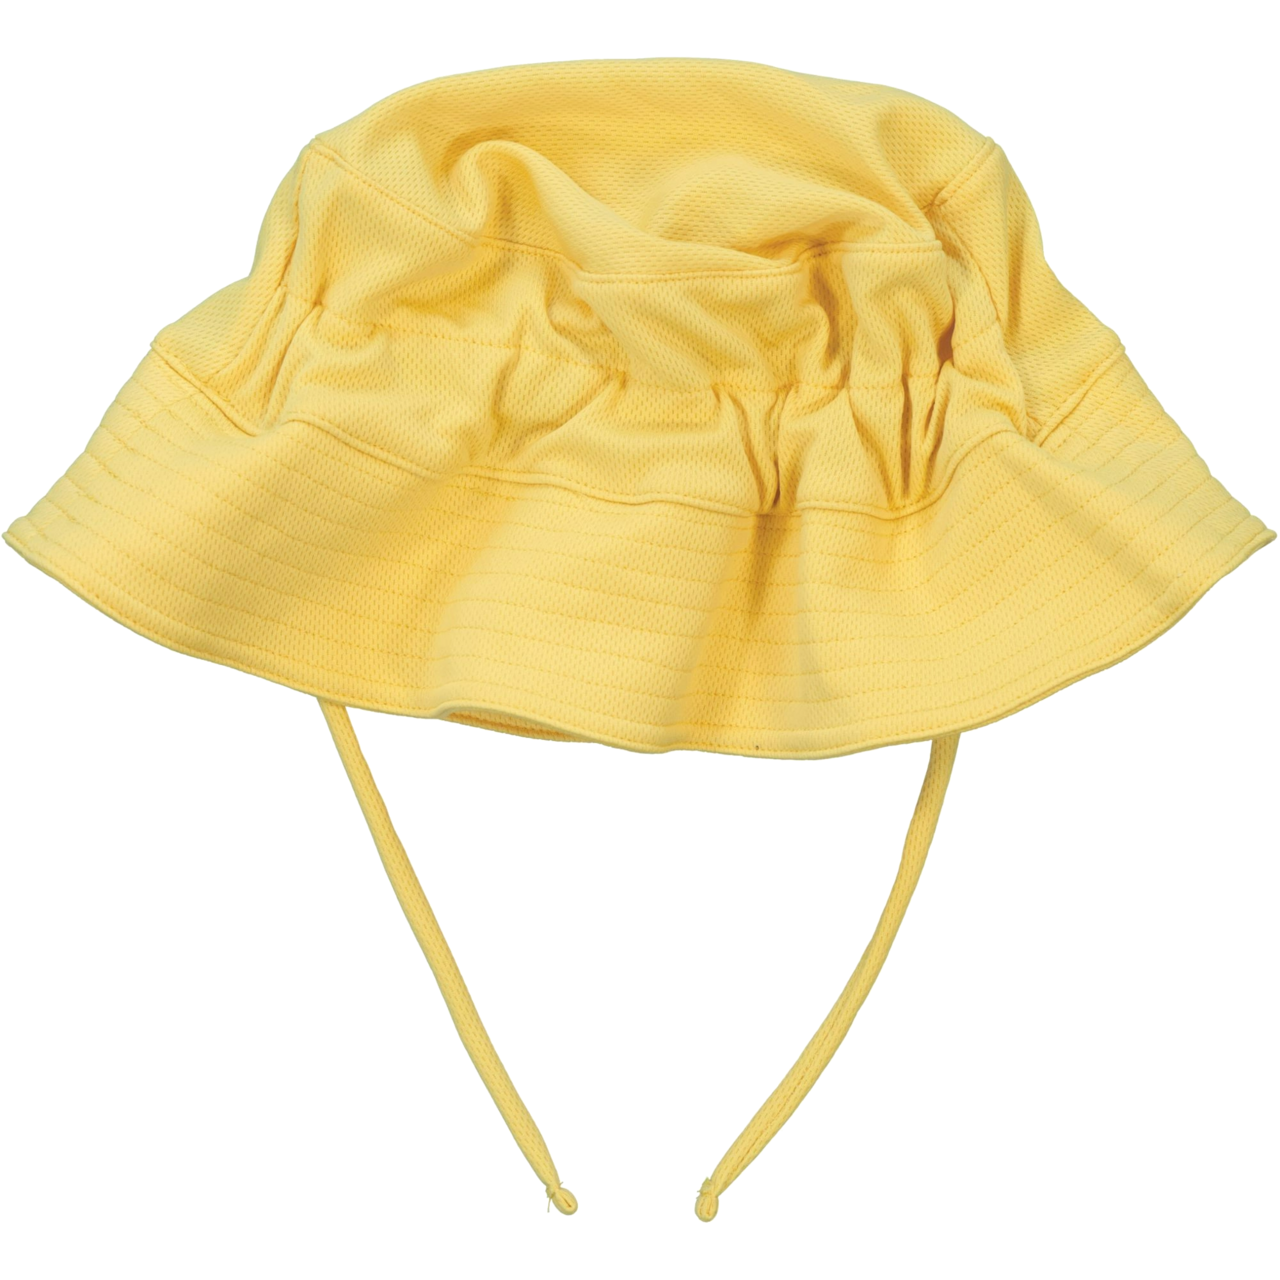 UV Sunny hat Yellow  2-6Y